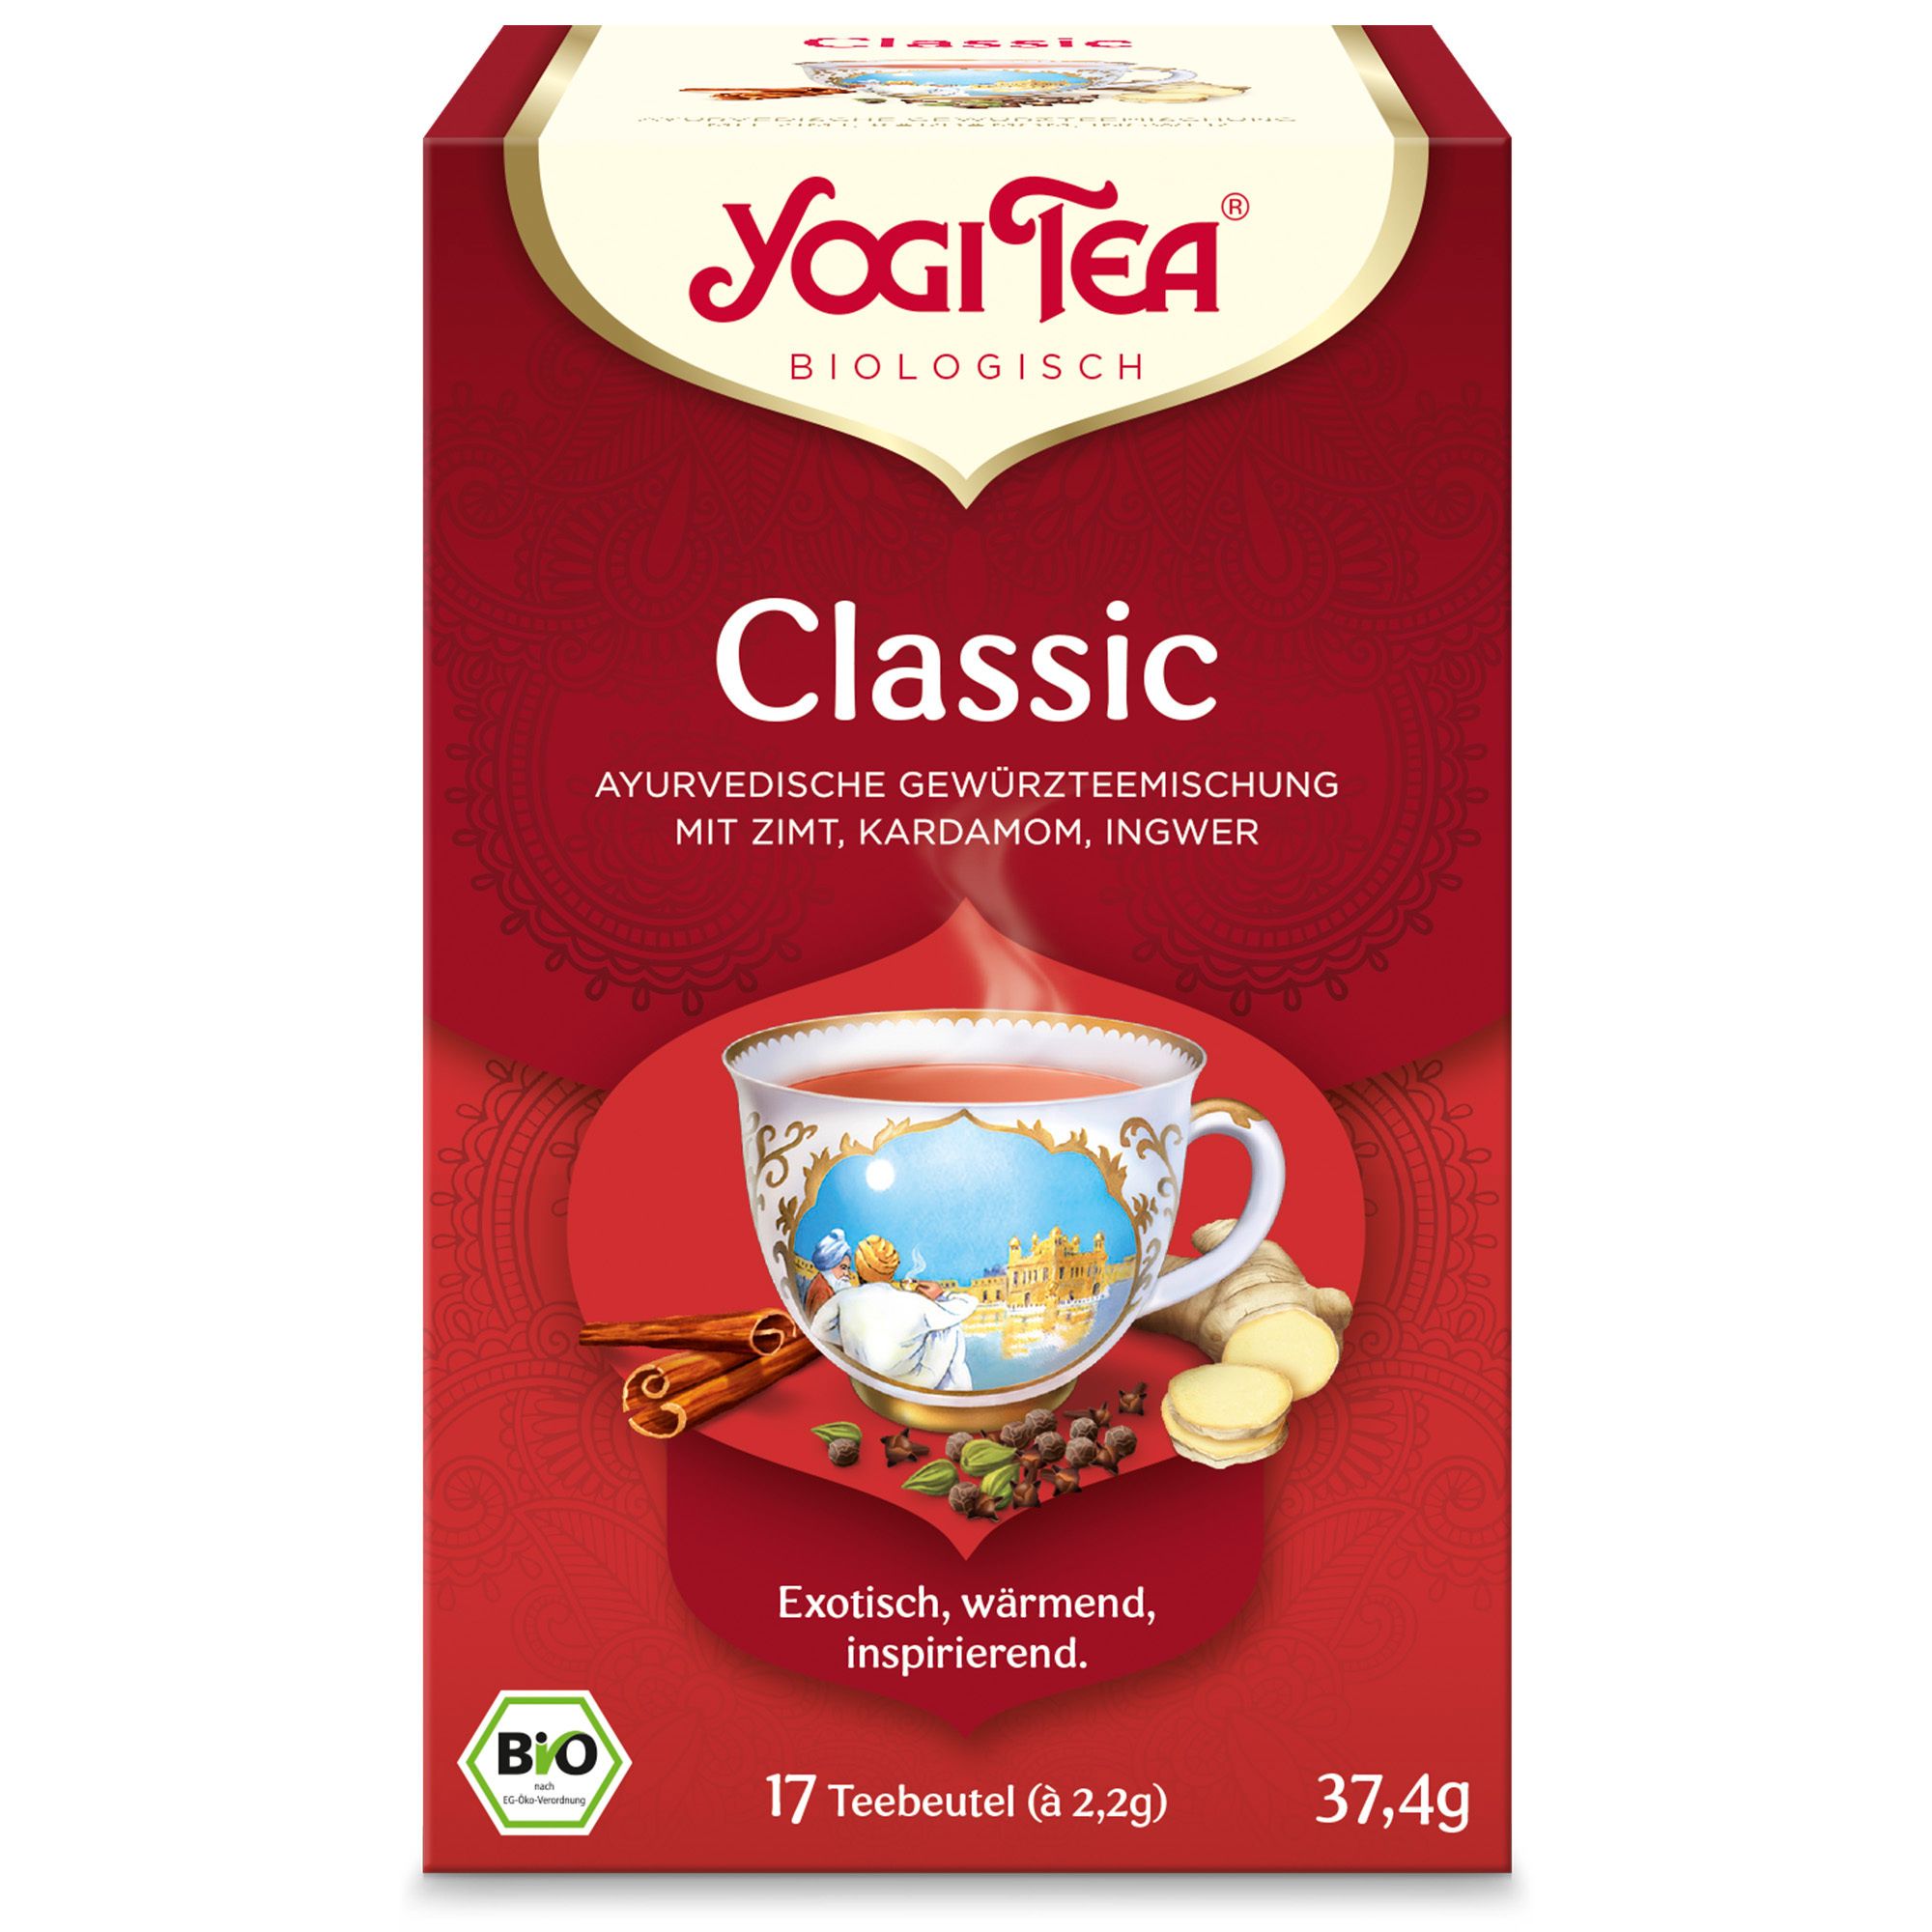 YOGI TEA® Classic, Bio Gewürz- und Kräutertee